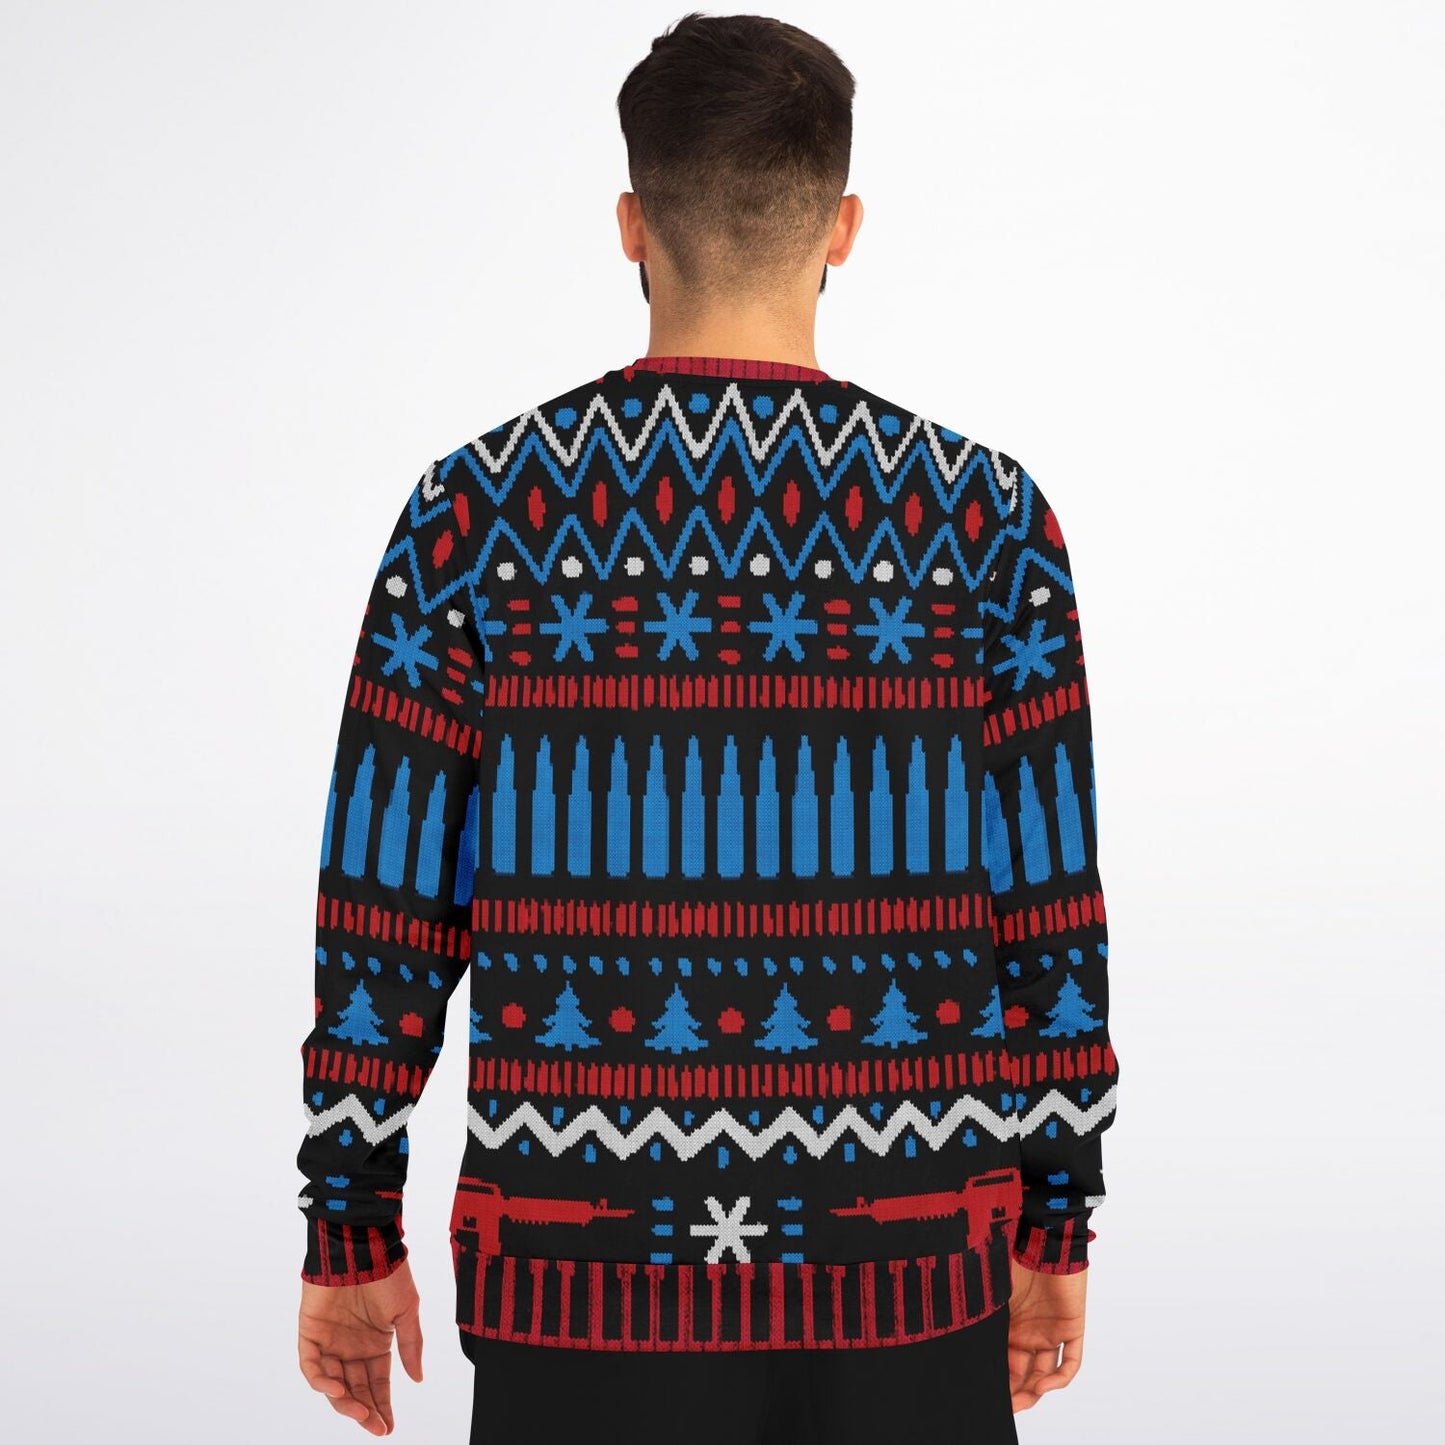 Ammo Wonderland Ugly Christmas Sweatshirt Fashion Sweatshirt - AOP Subliminator 